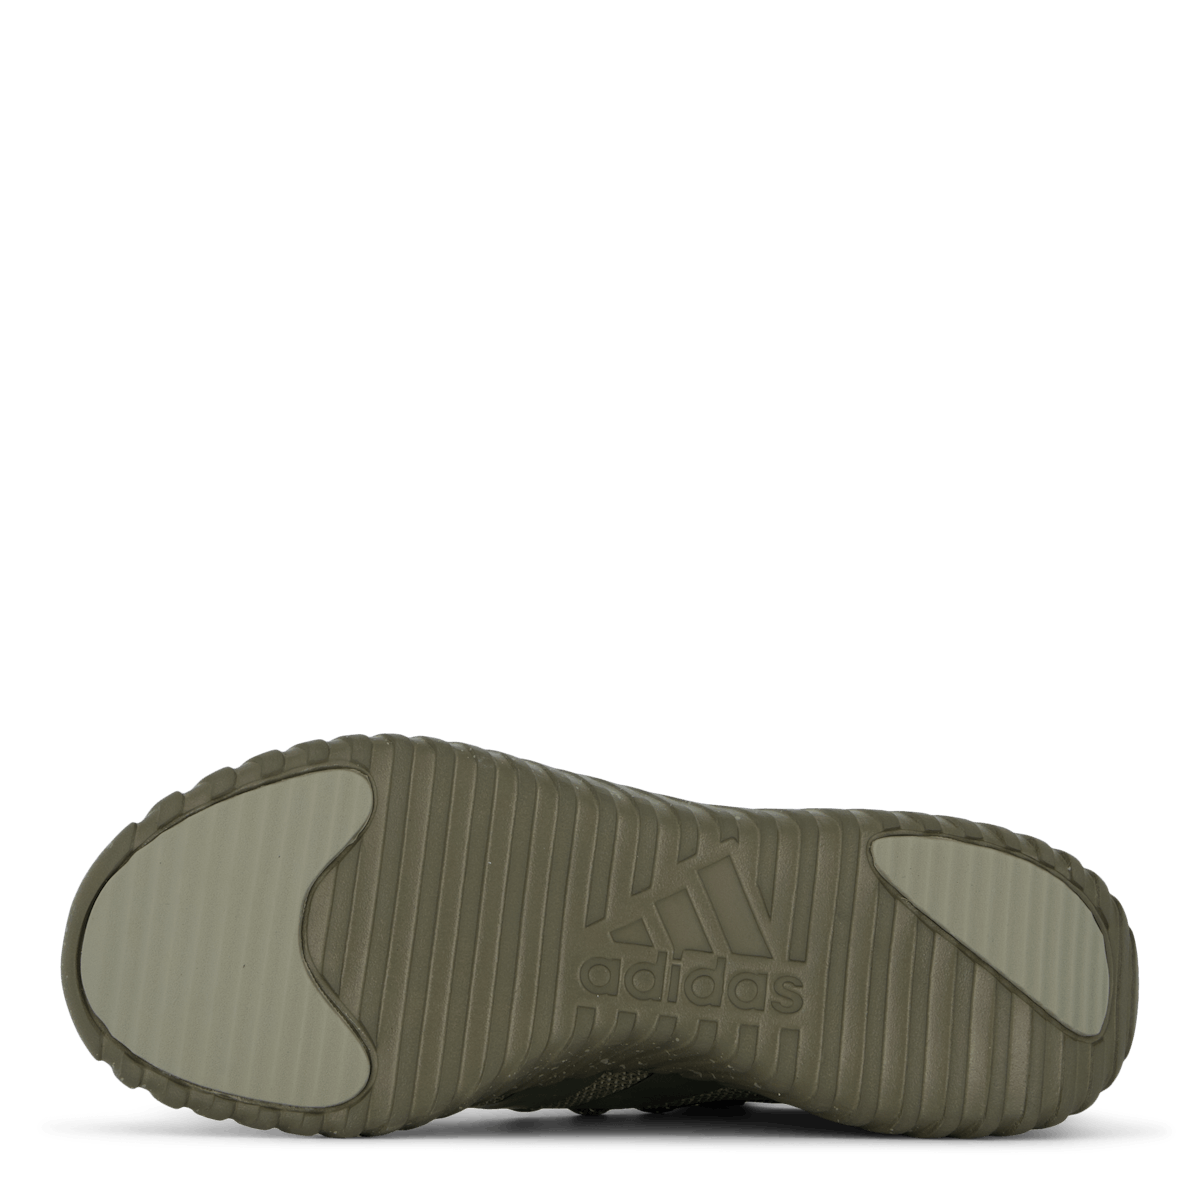 Kaptir 3.0 Shoes Olive Strata / Olive Strata / Silver Pebble